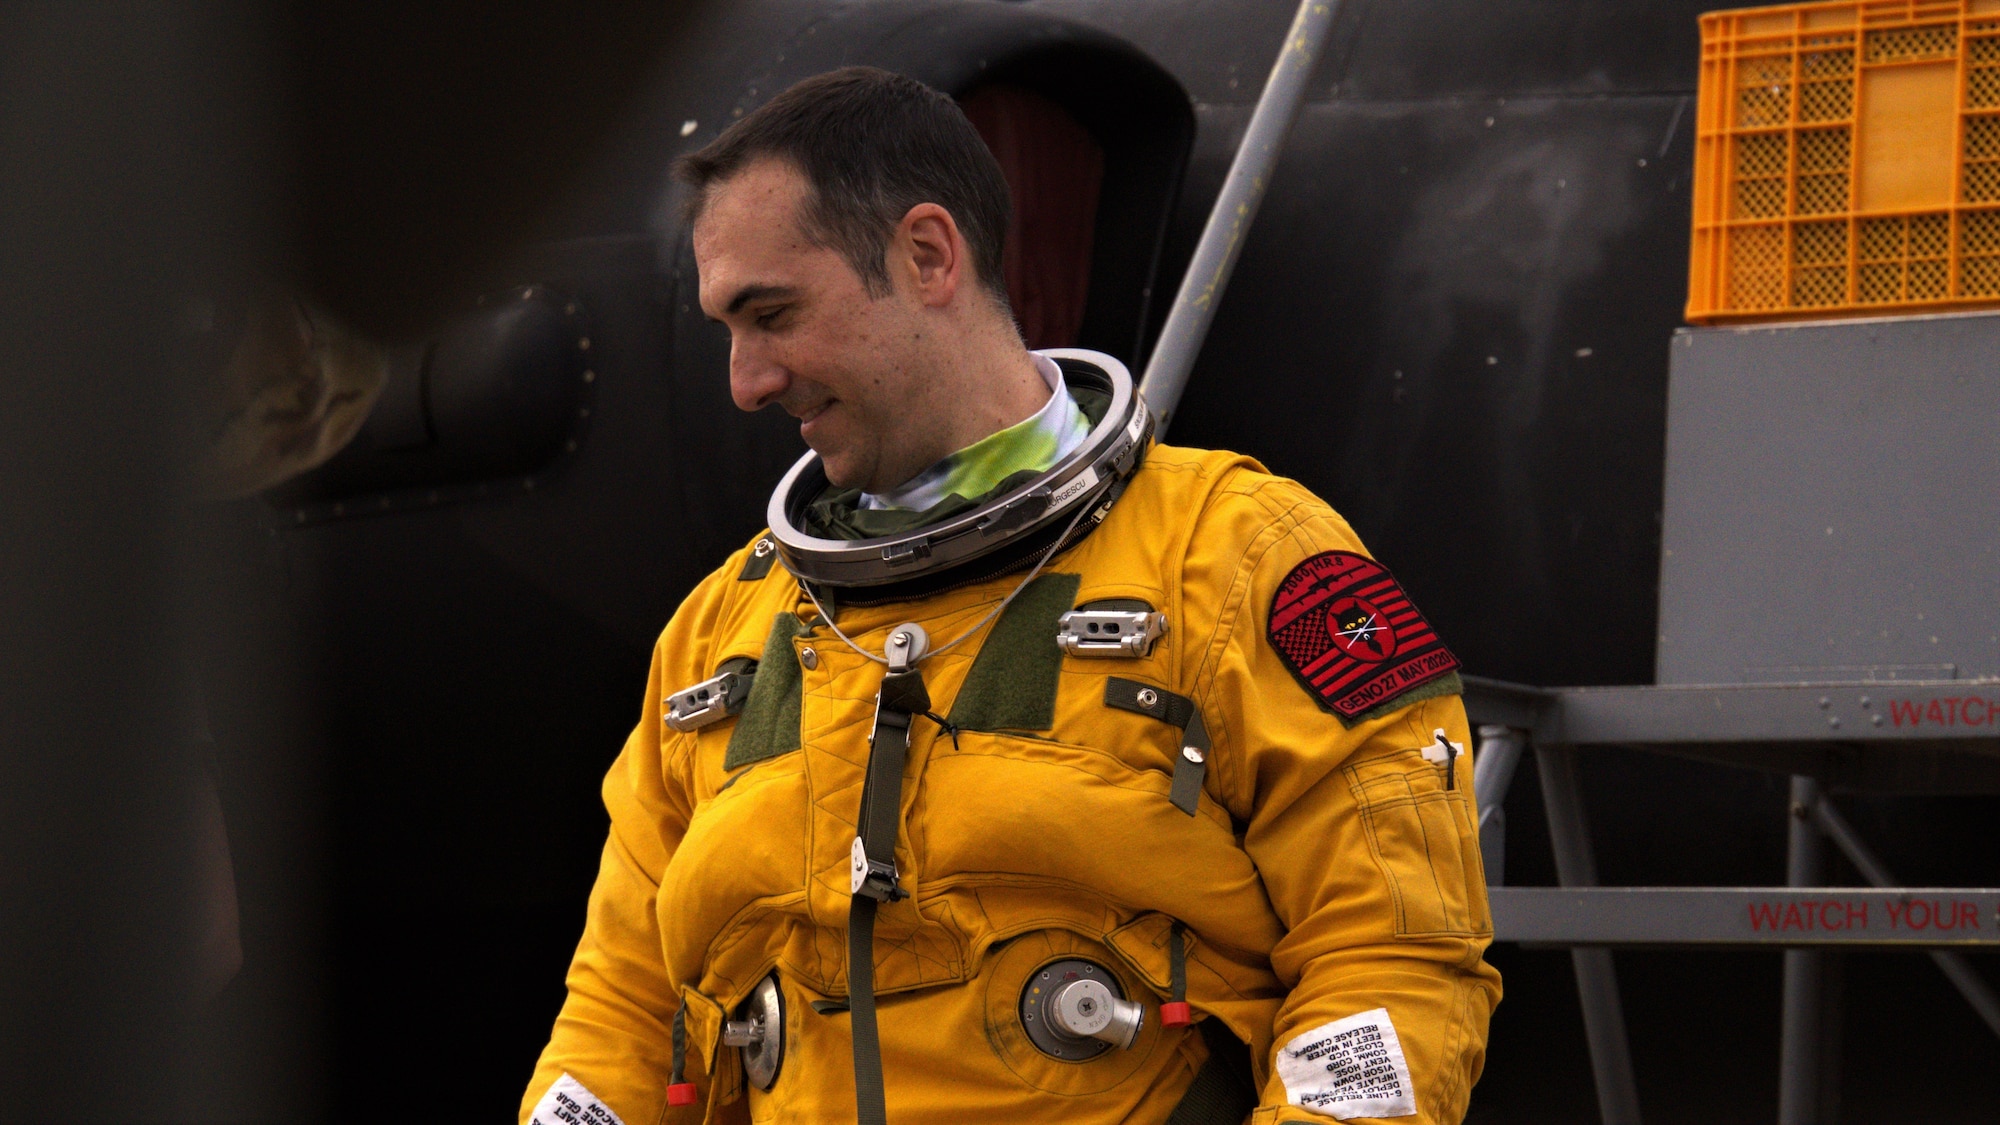 Lt. Col Georgescu smiles after receiving a Black Cat patch on his left shoulder that commemorates his 2,000th hour achievement.